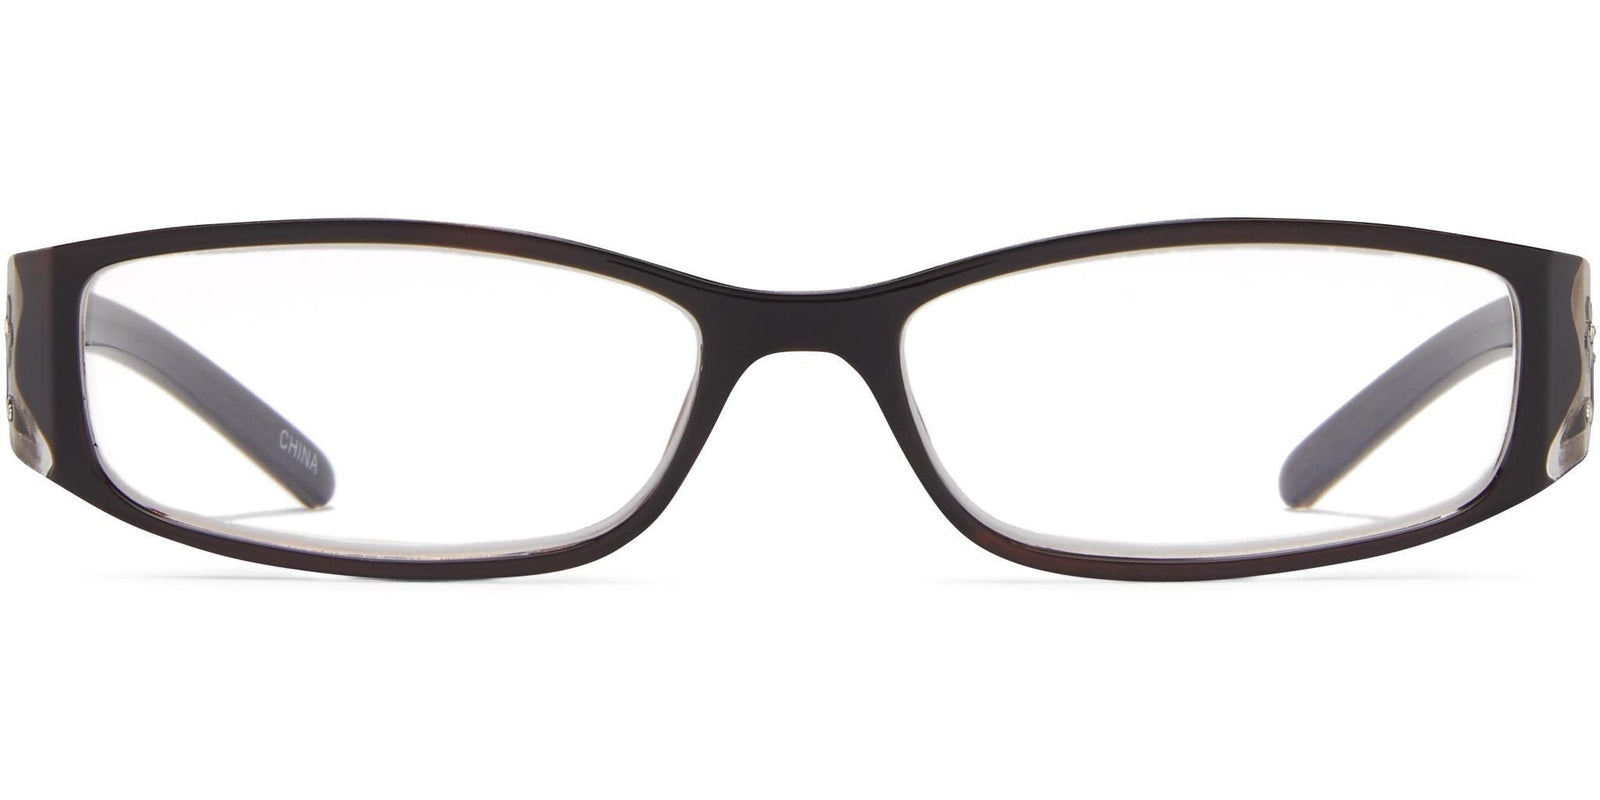 Louisville Oval Reading Glasses - Black